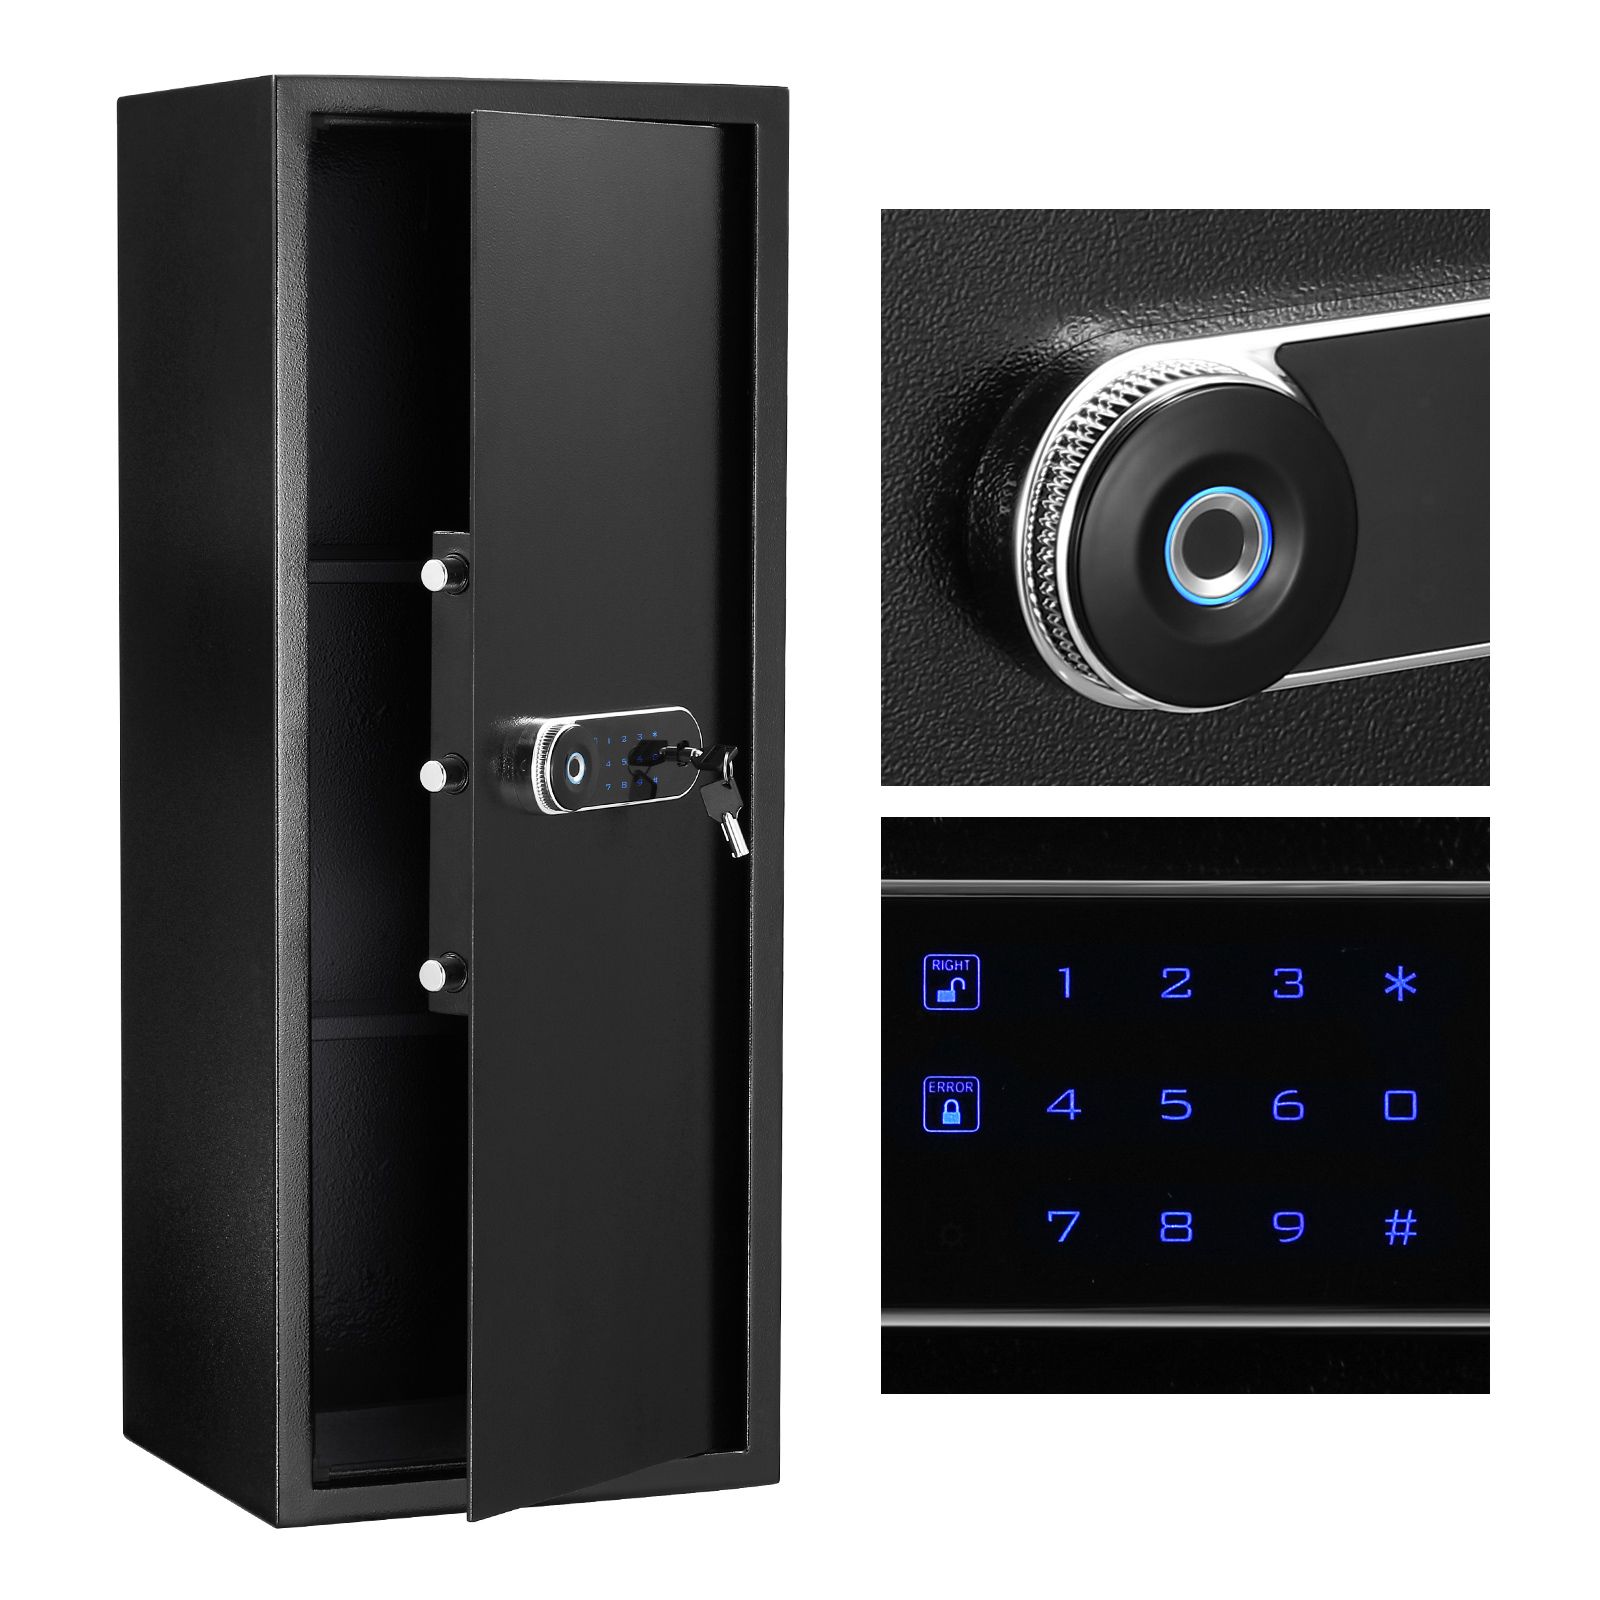 Security Box Digital Safe Electronic 80L Key Lock Fingerprint Steel Money Jewellery Cash Deposit Password Home Office